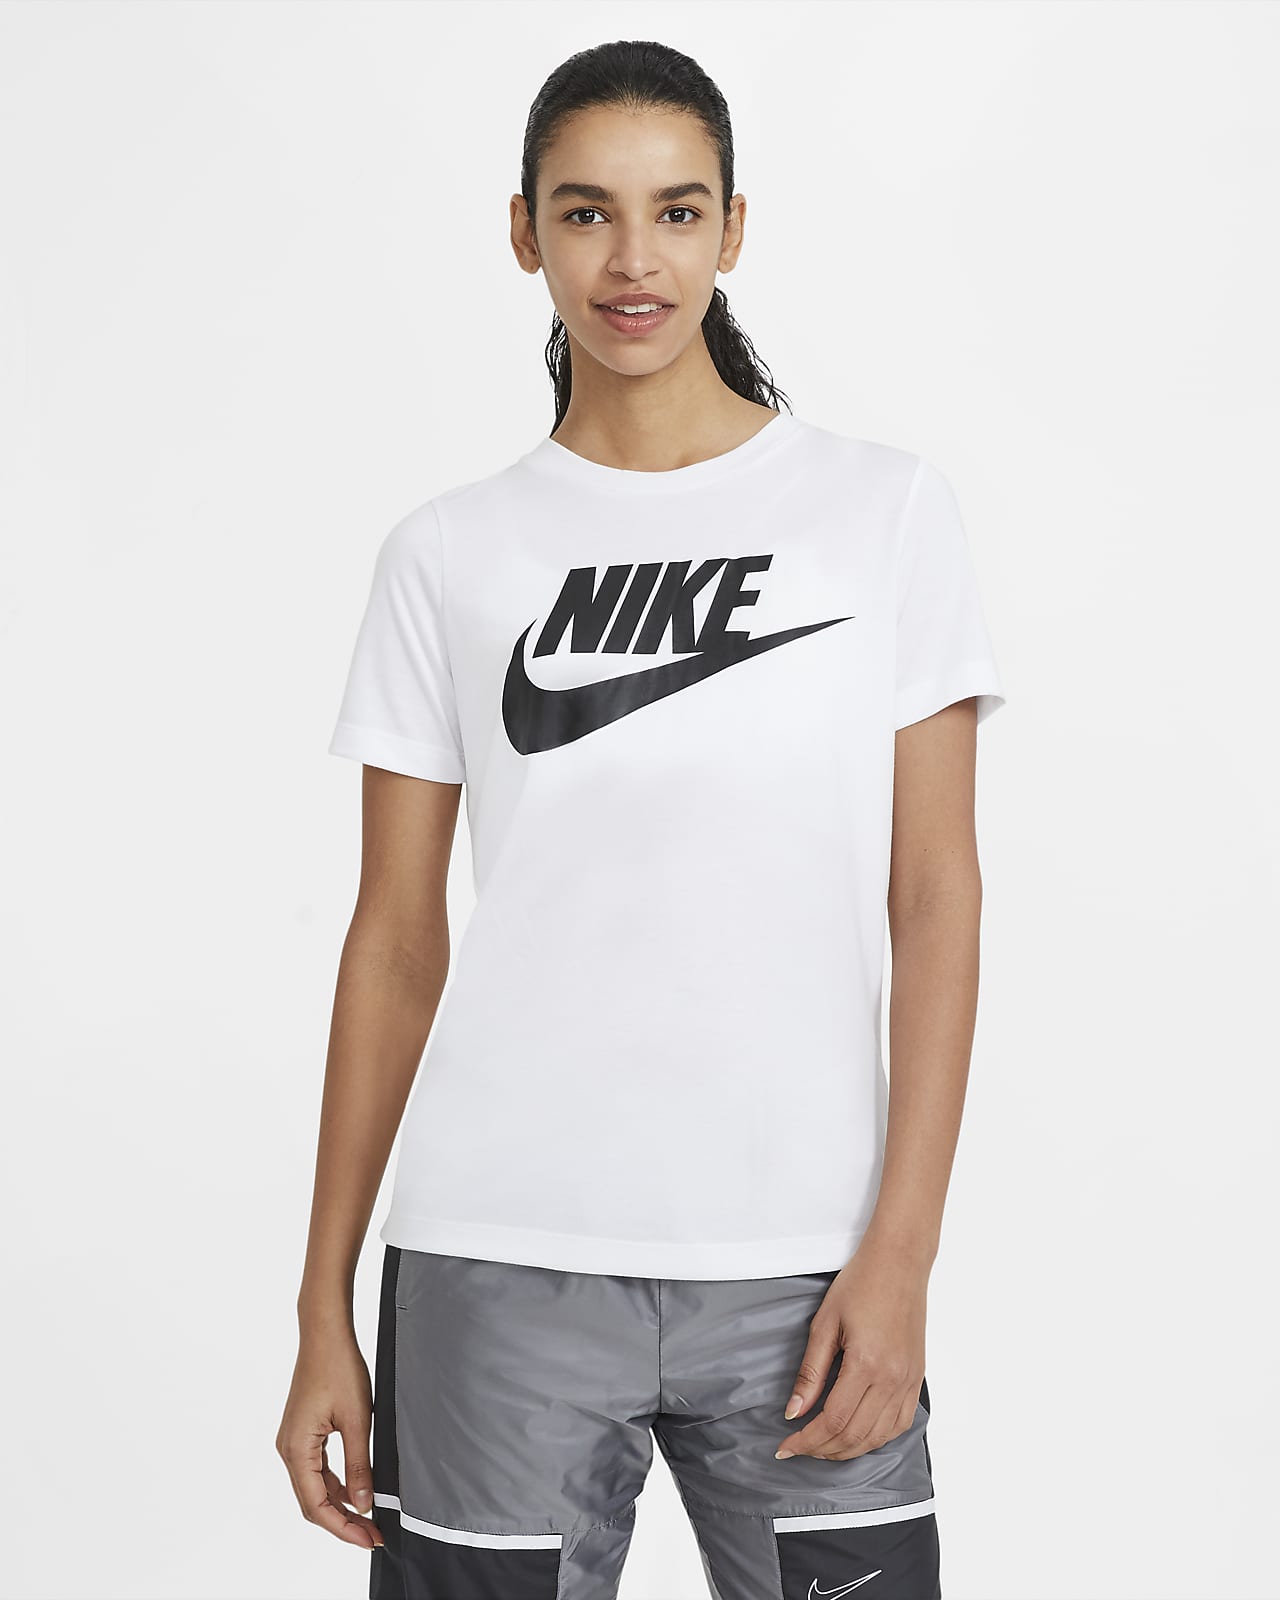 Nike Haircut T Shirt : Nike Training - Dry - T-shirt - Camouflage bleu ...